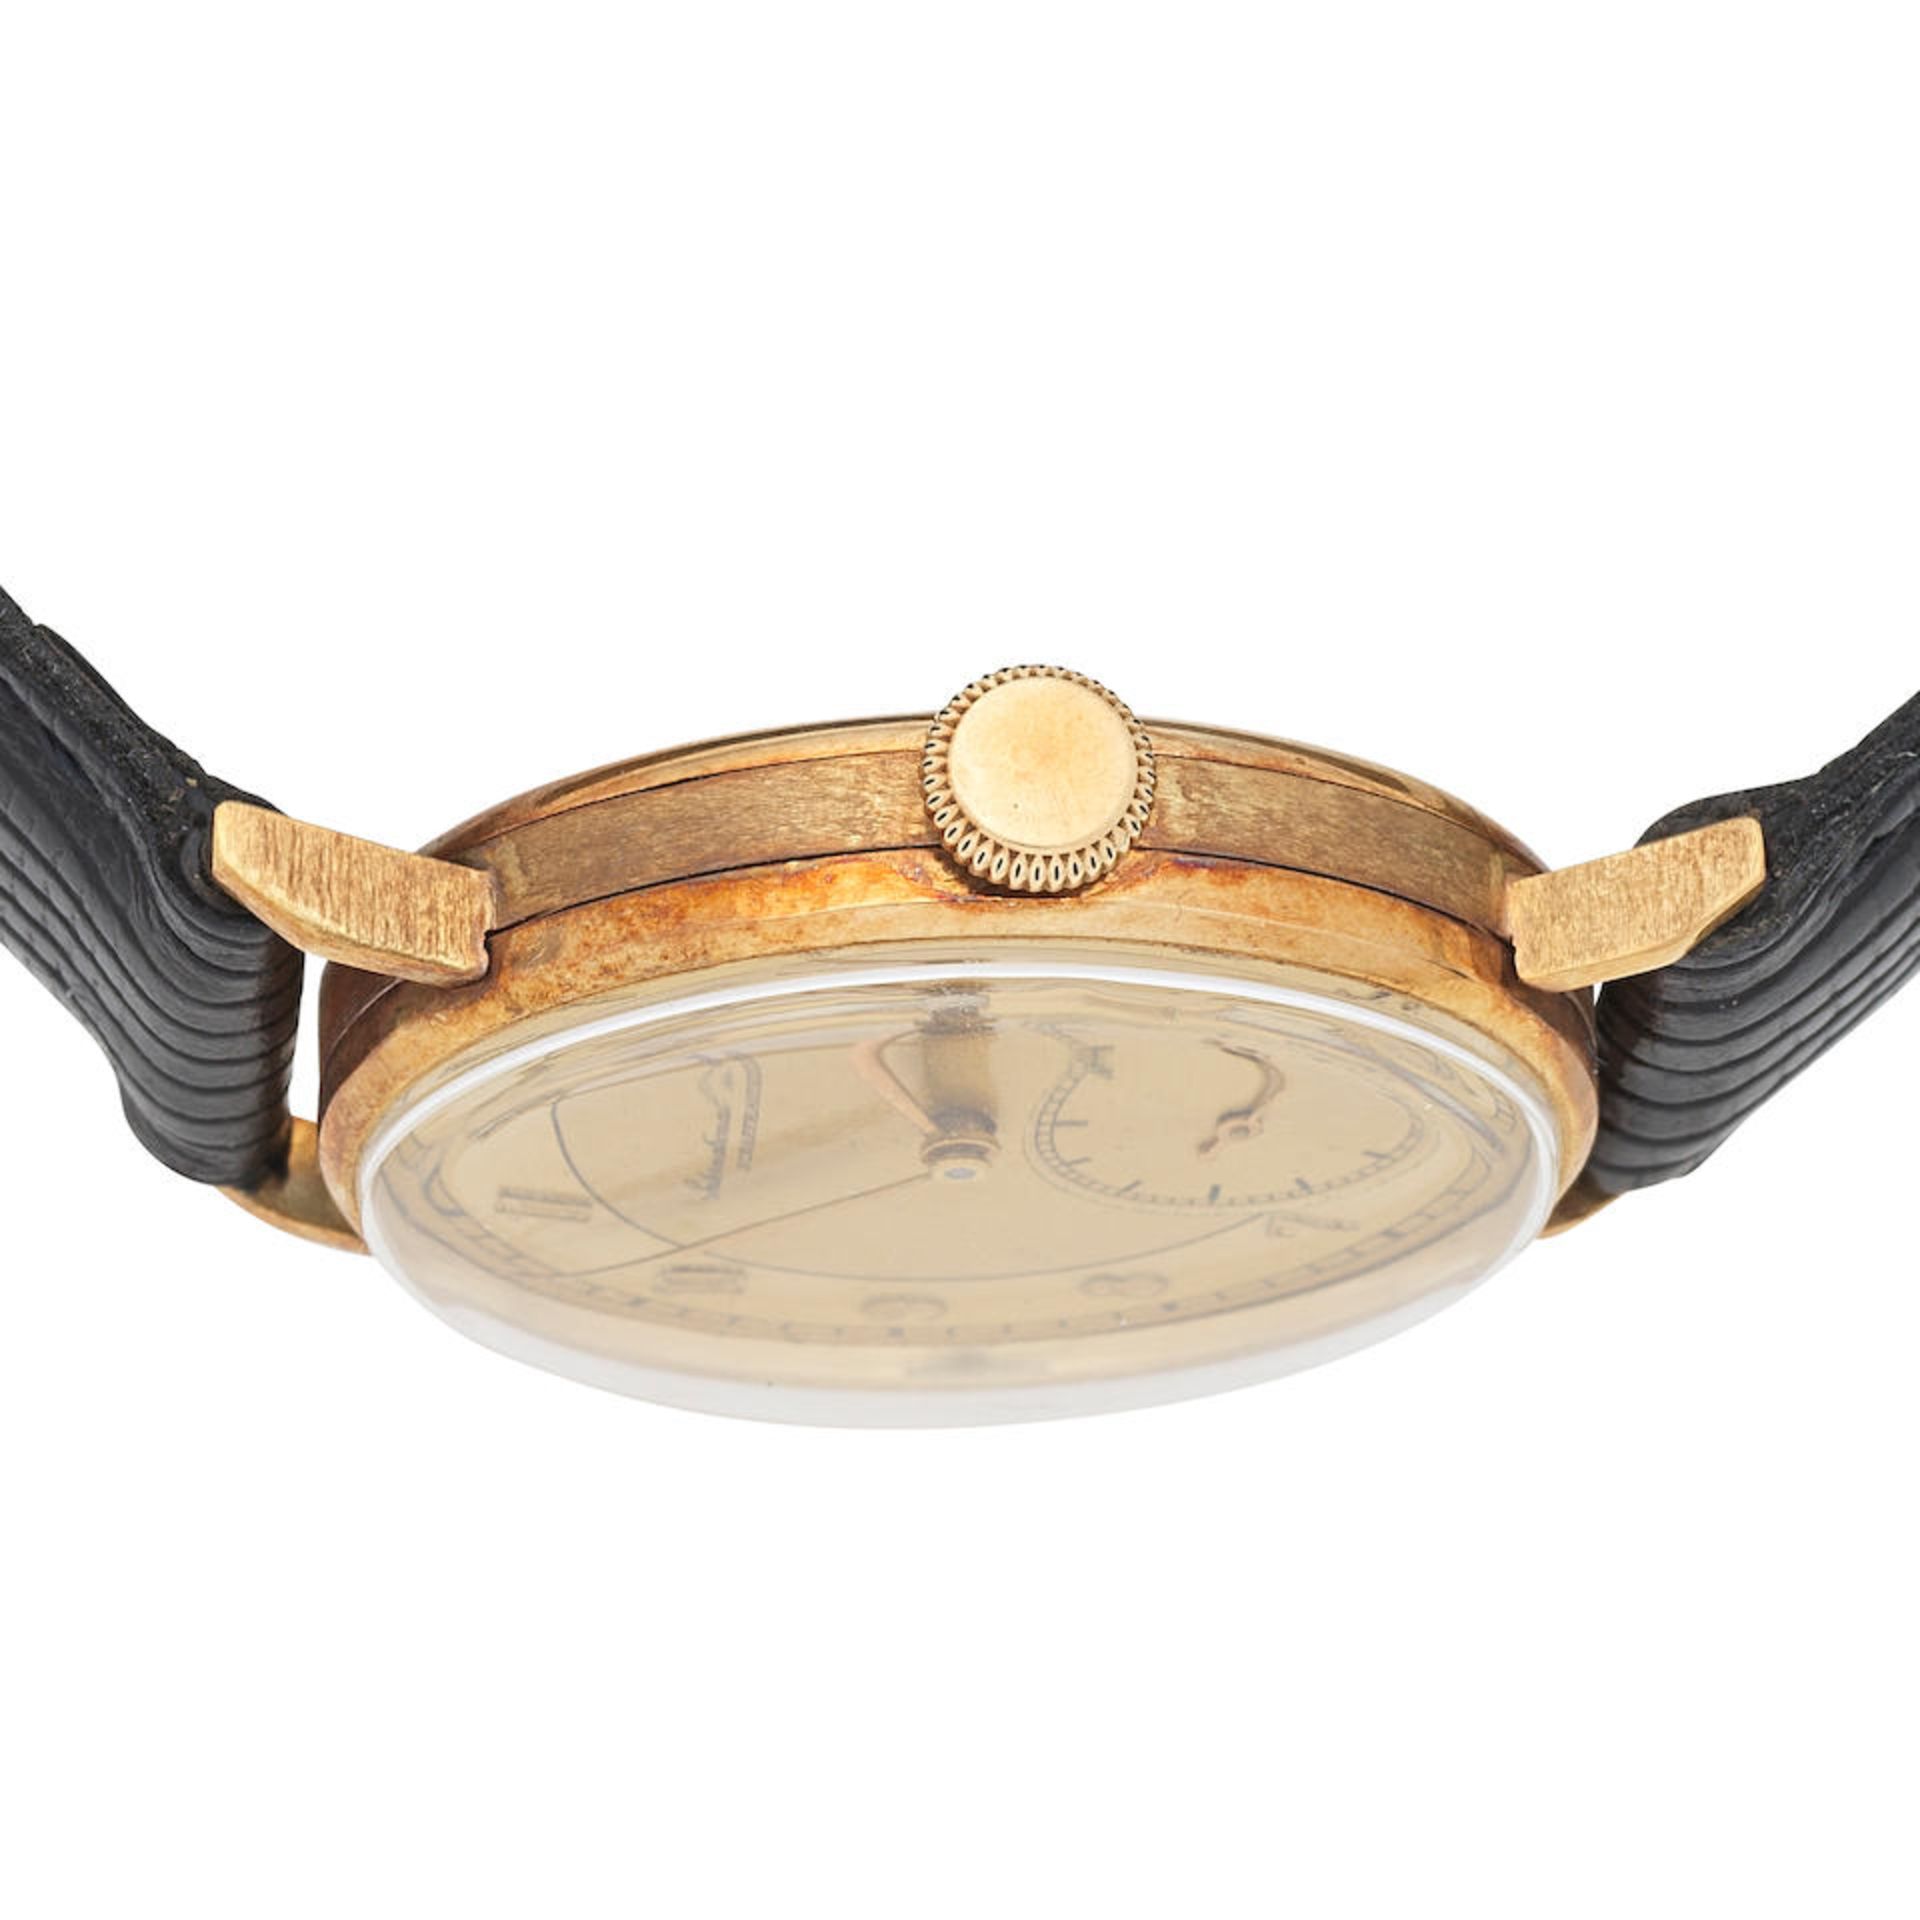 International Watch Company, Schaffhausen. A 14K gold manual wind wristwatch Circa 1940 - Bild 3 aus 5